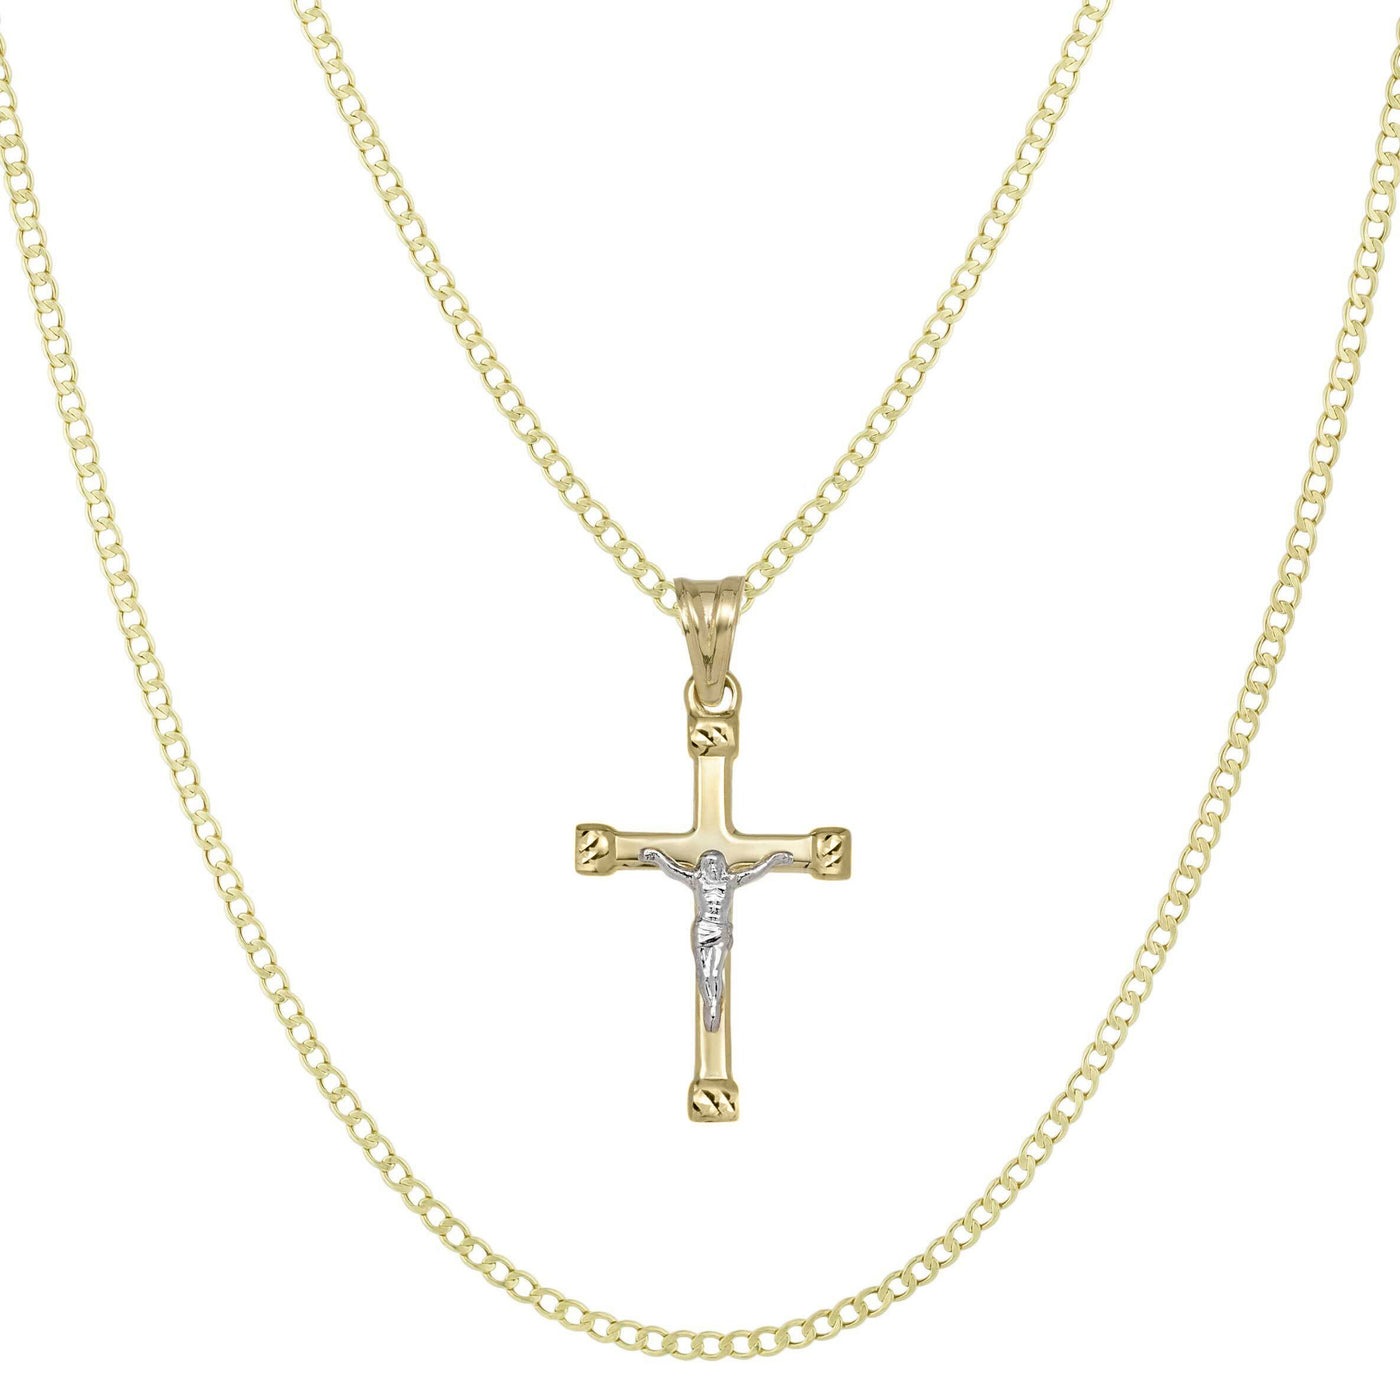 1 3/8" Jesus Crucifix Cross Pendant & Chain Necklace Set 10K Yellow White Gold